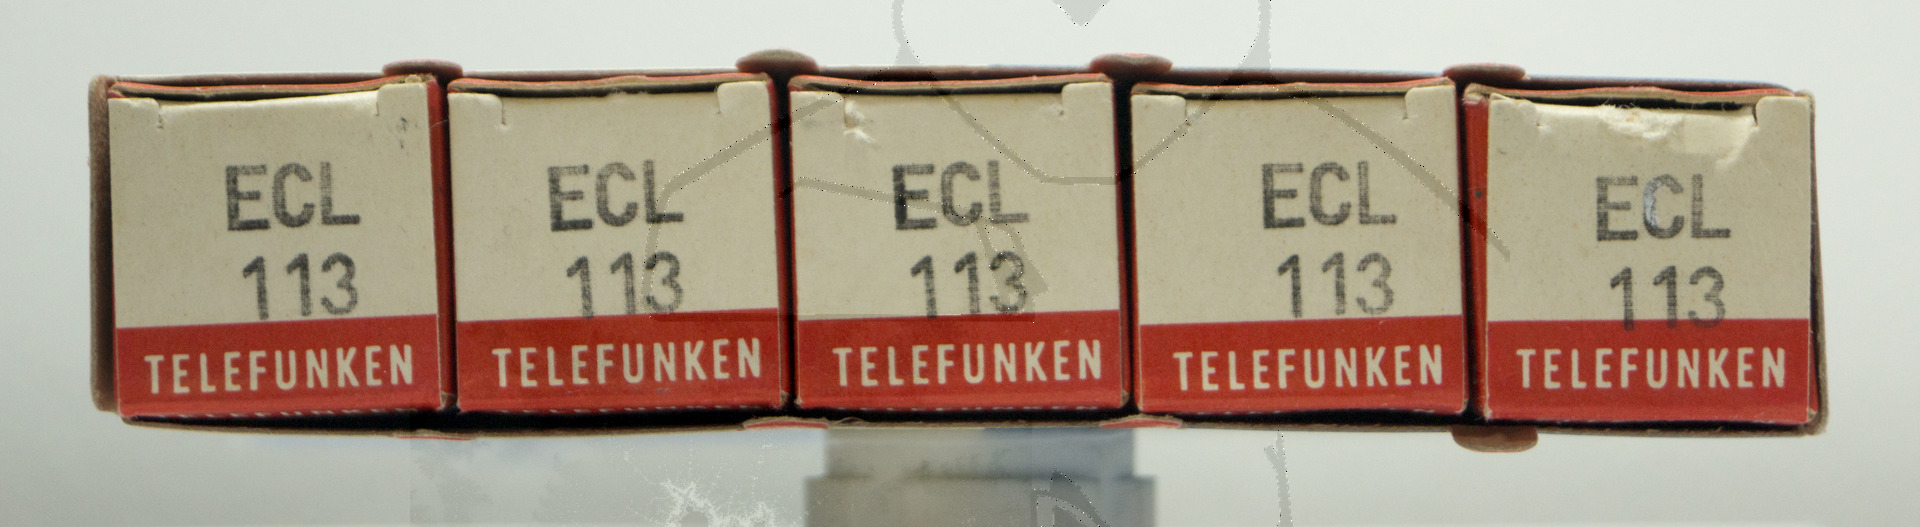 Röhre ECL113 #3337 Verpackung Bild 4 - Riegel